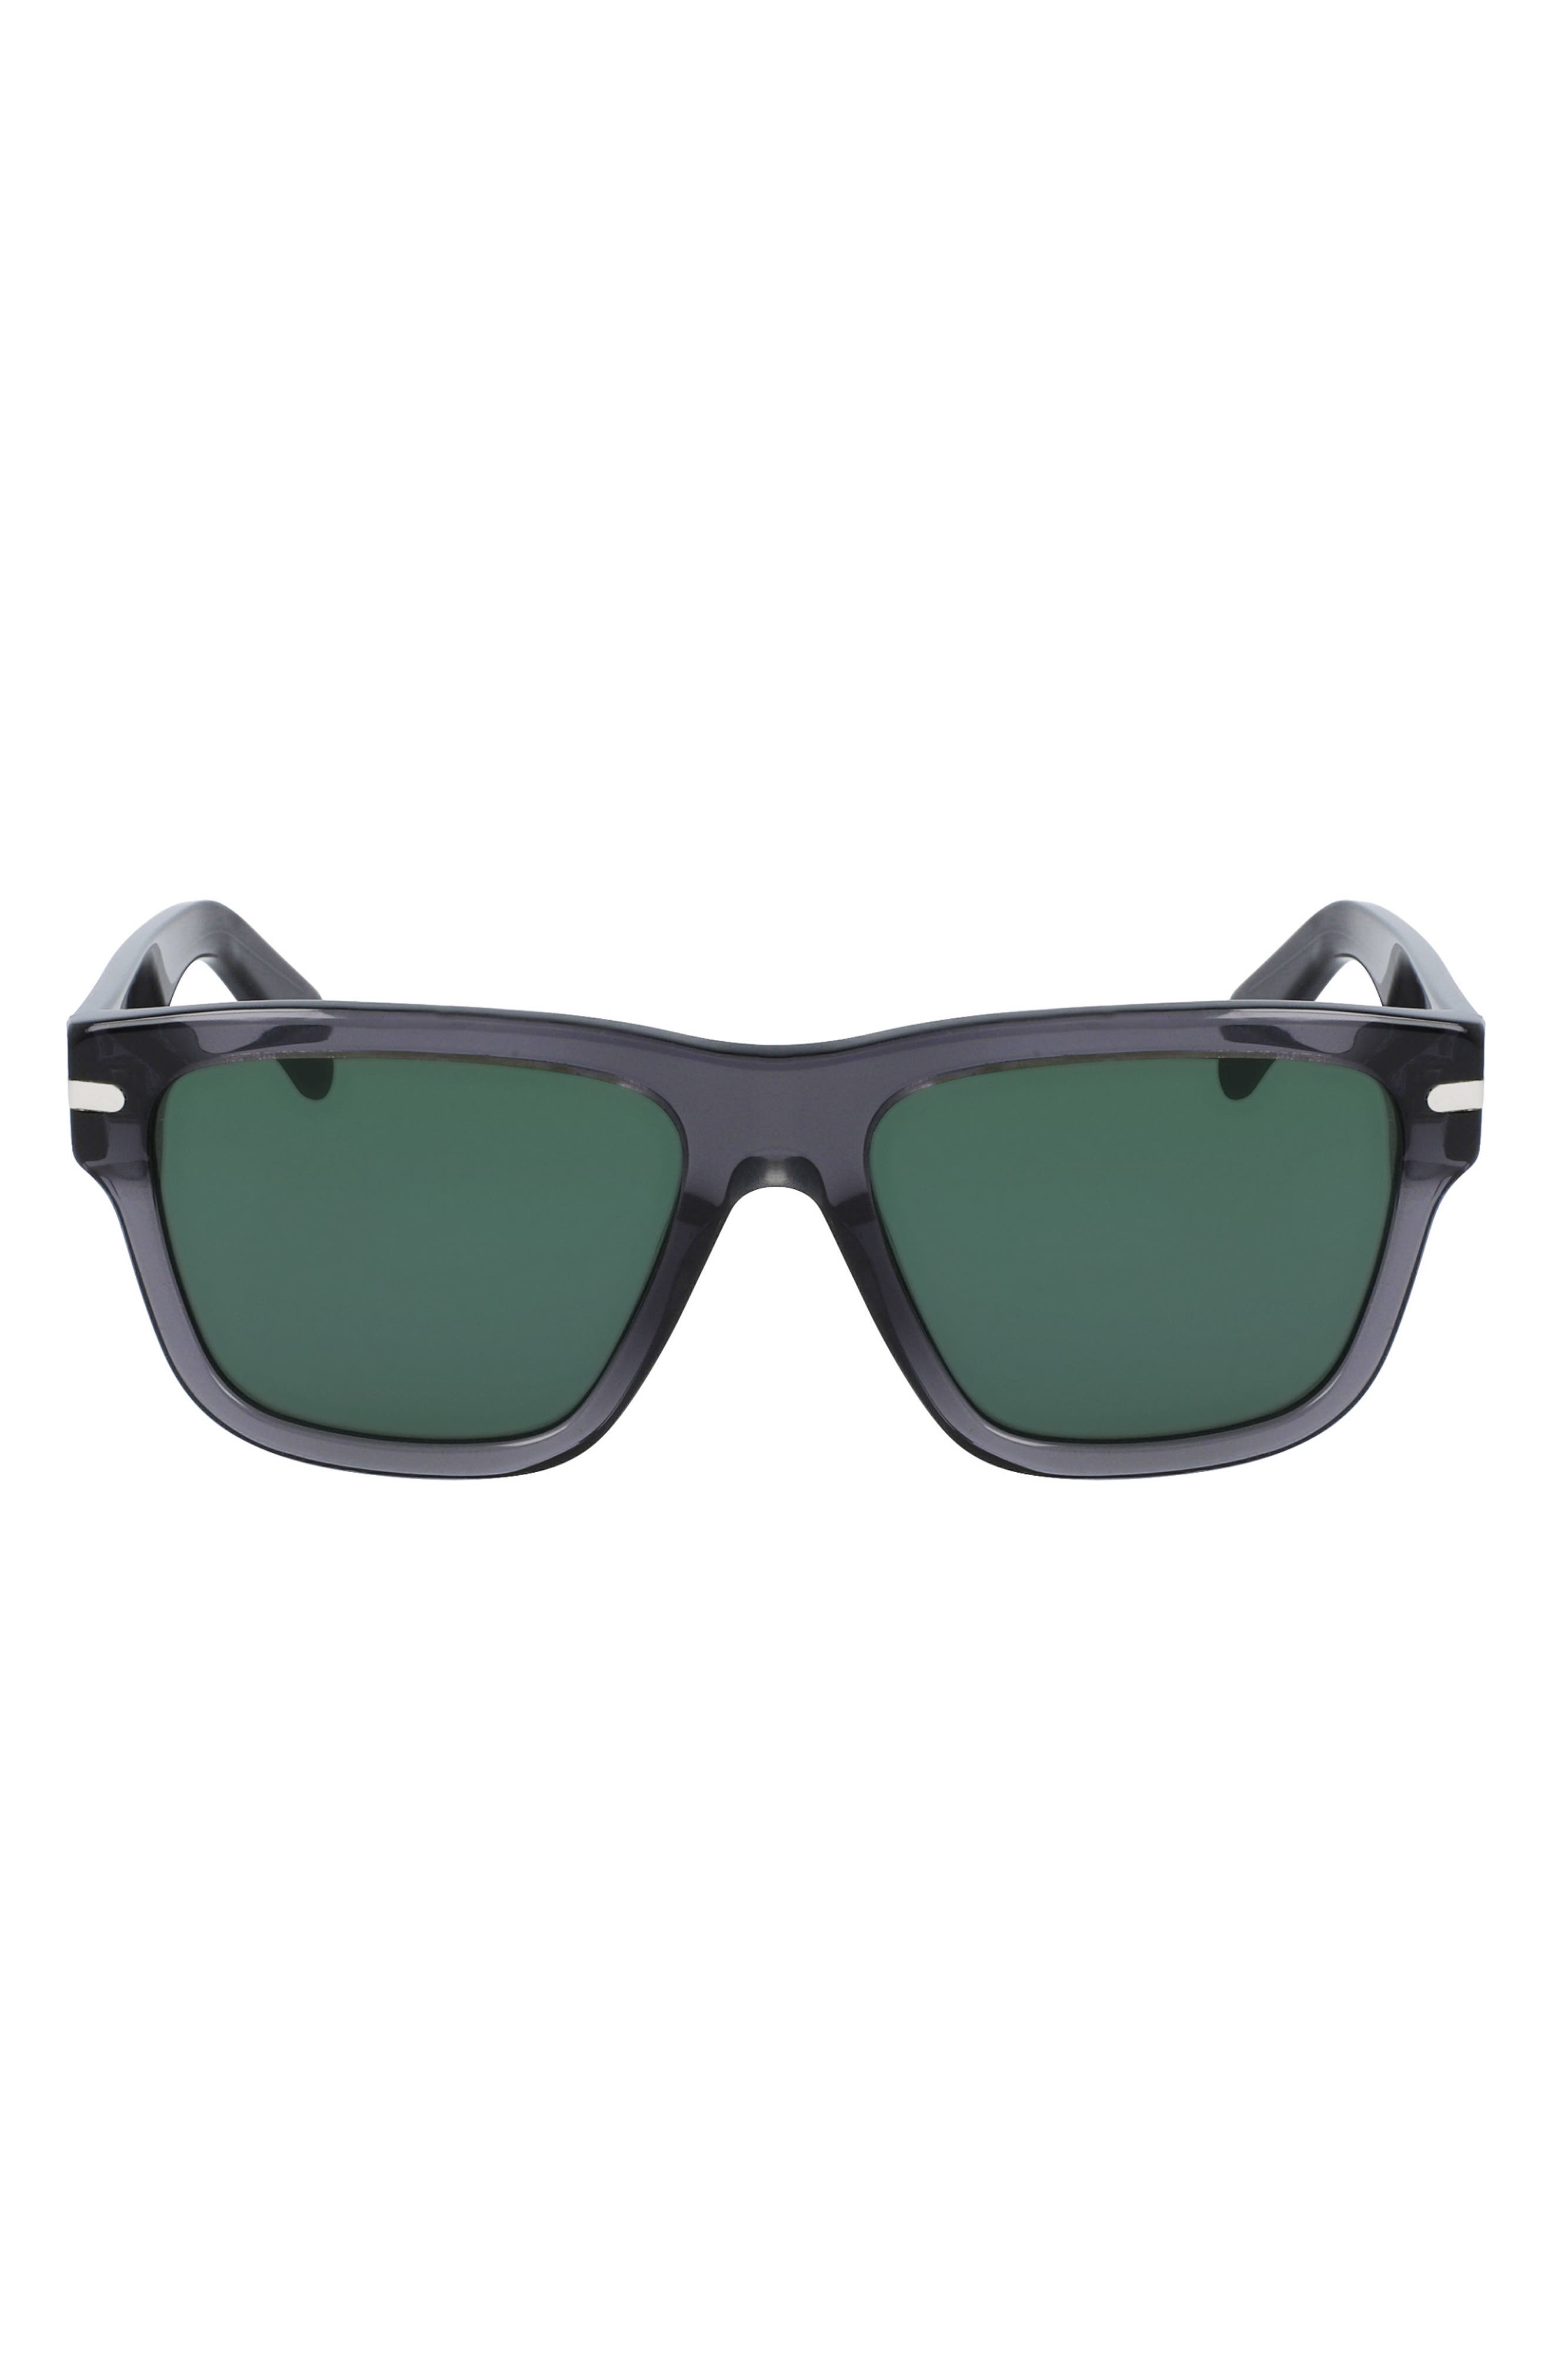 Salvatore Ferragamo 56mm Rectangular Sunglasses in Crystal Grey/Green at Nordstrom